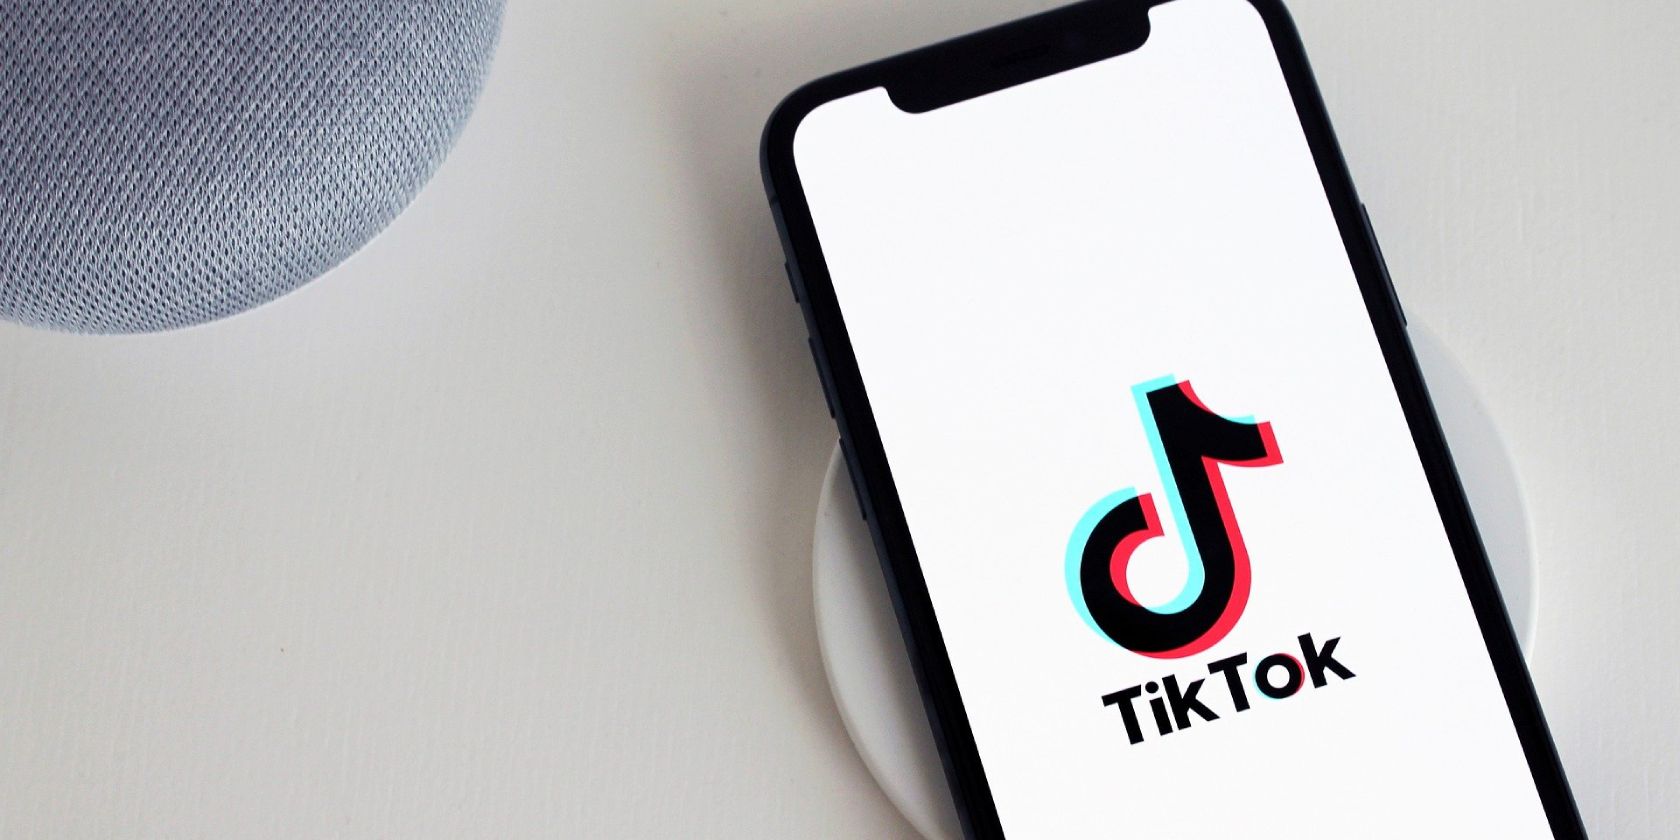 TikTok-App-on-iPhone.jpg